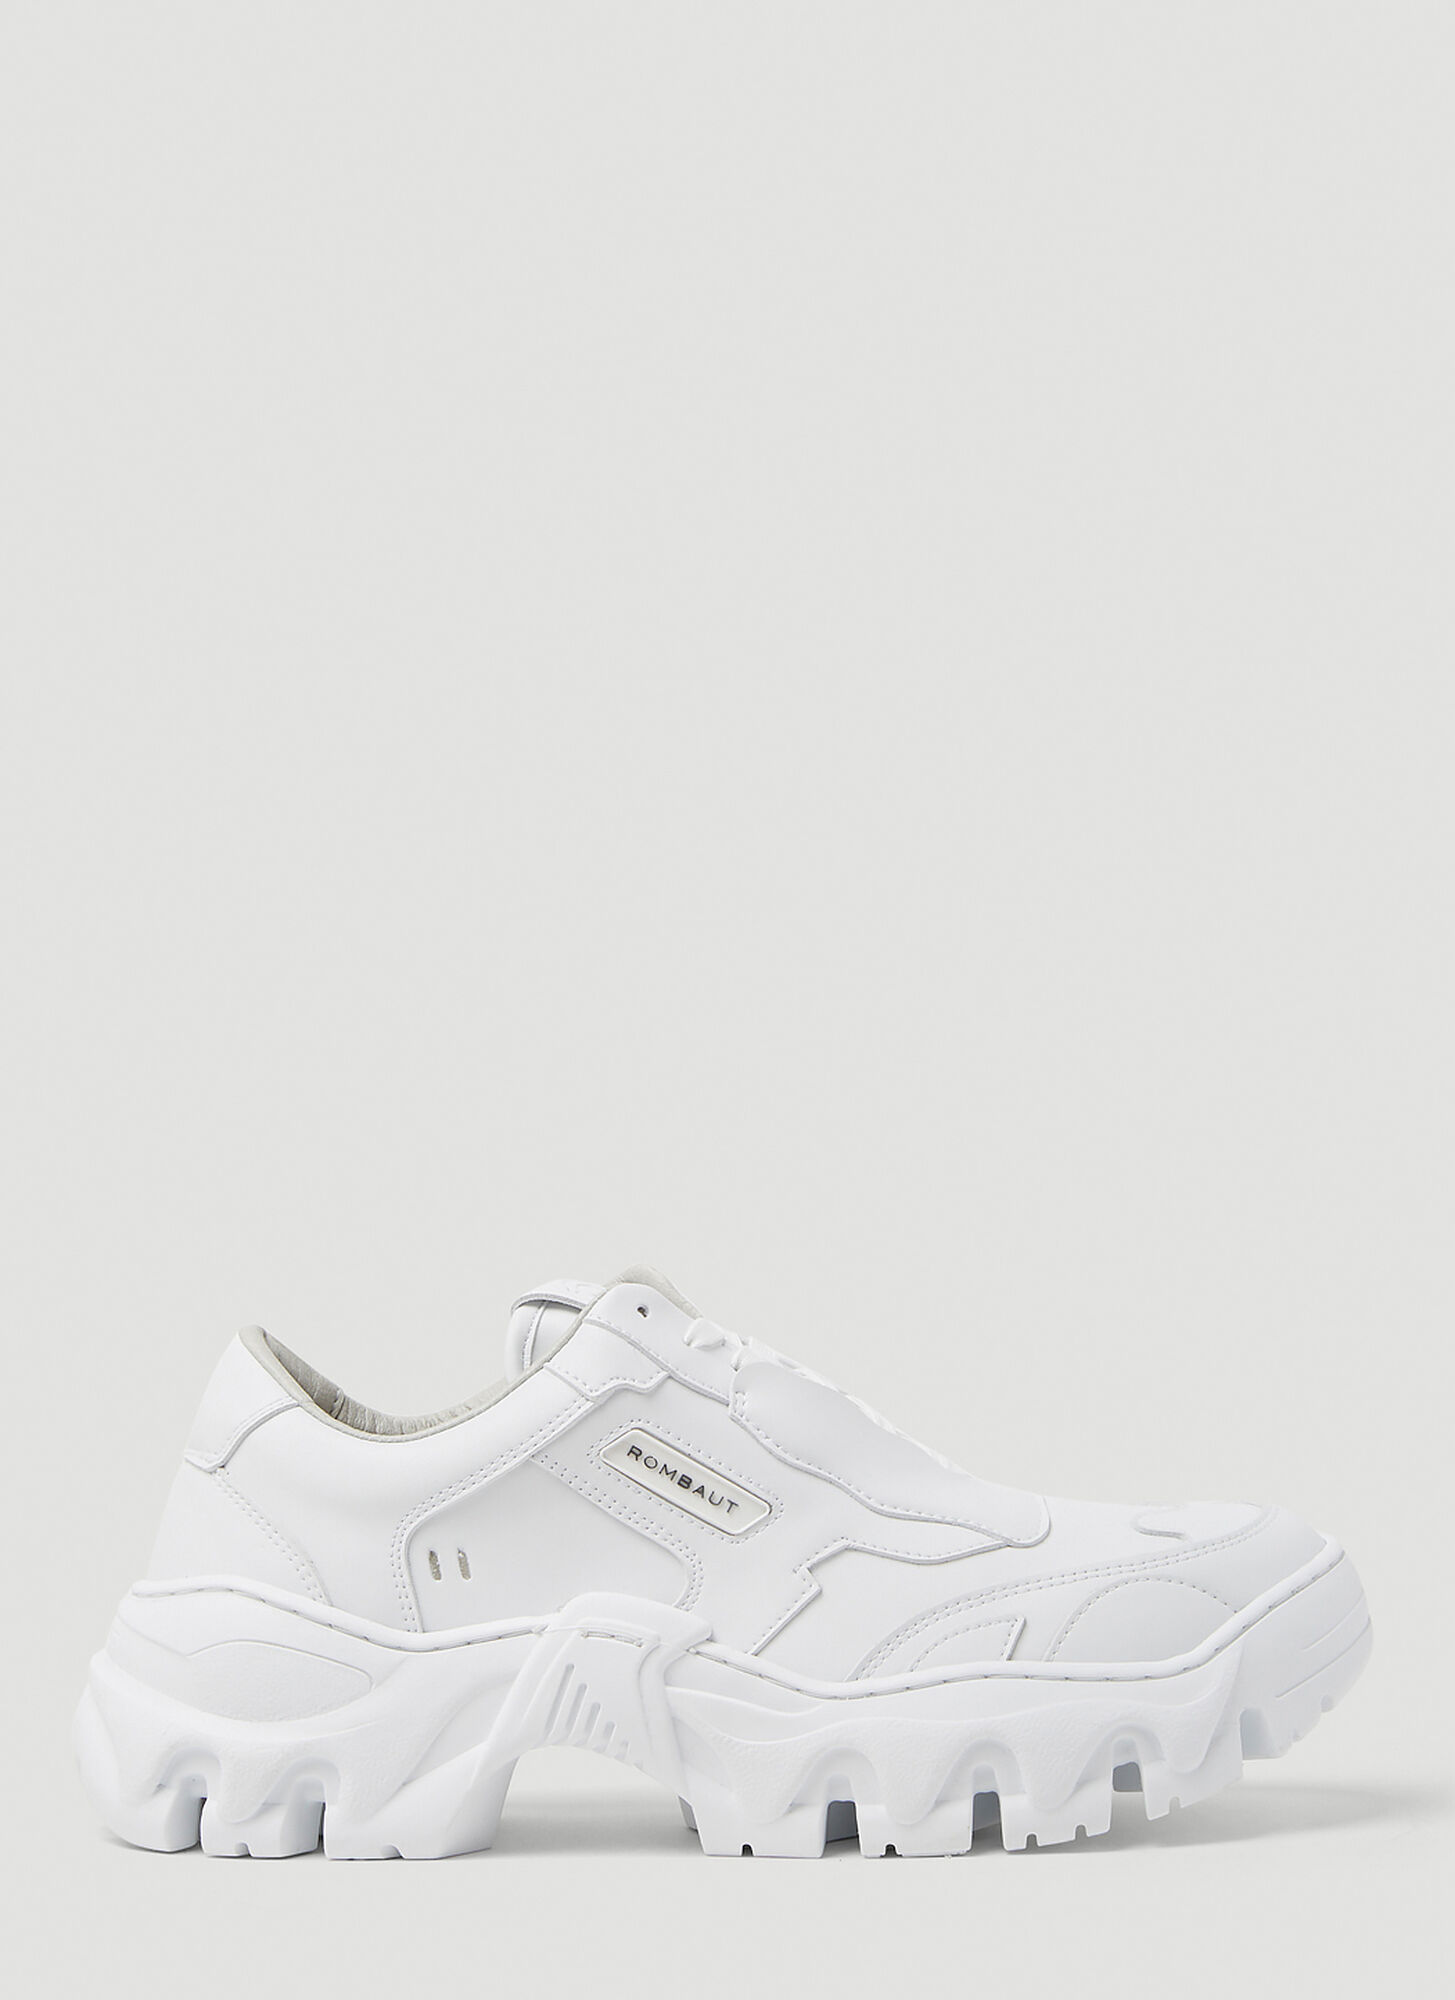 Rombaut Boccaccio Ii Chunky Sneakers In White